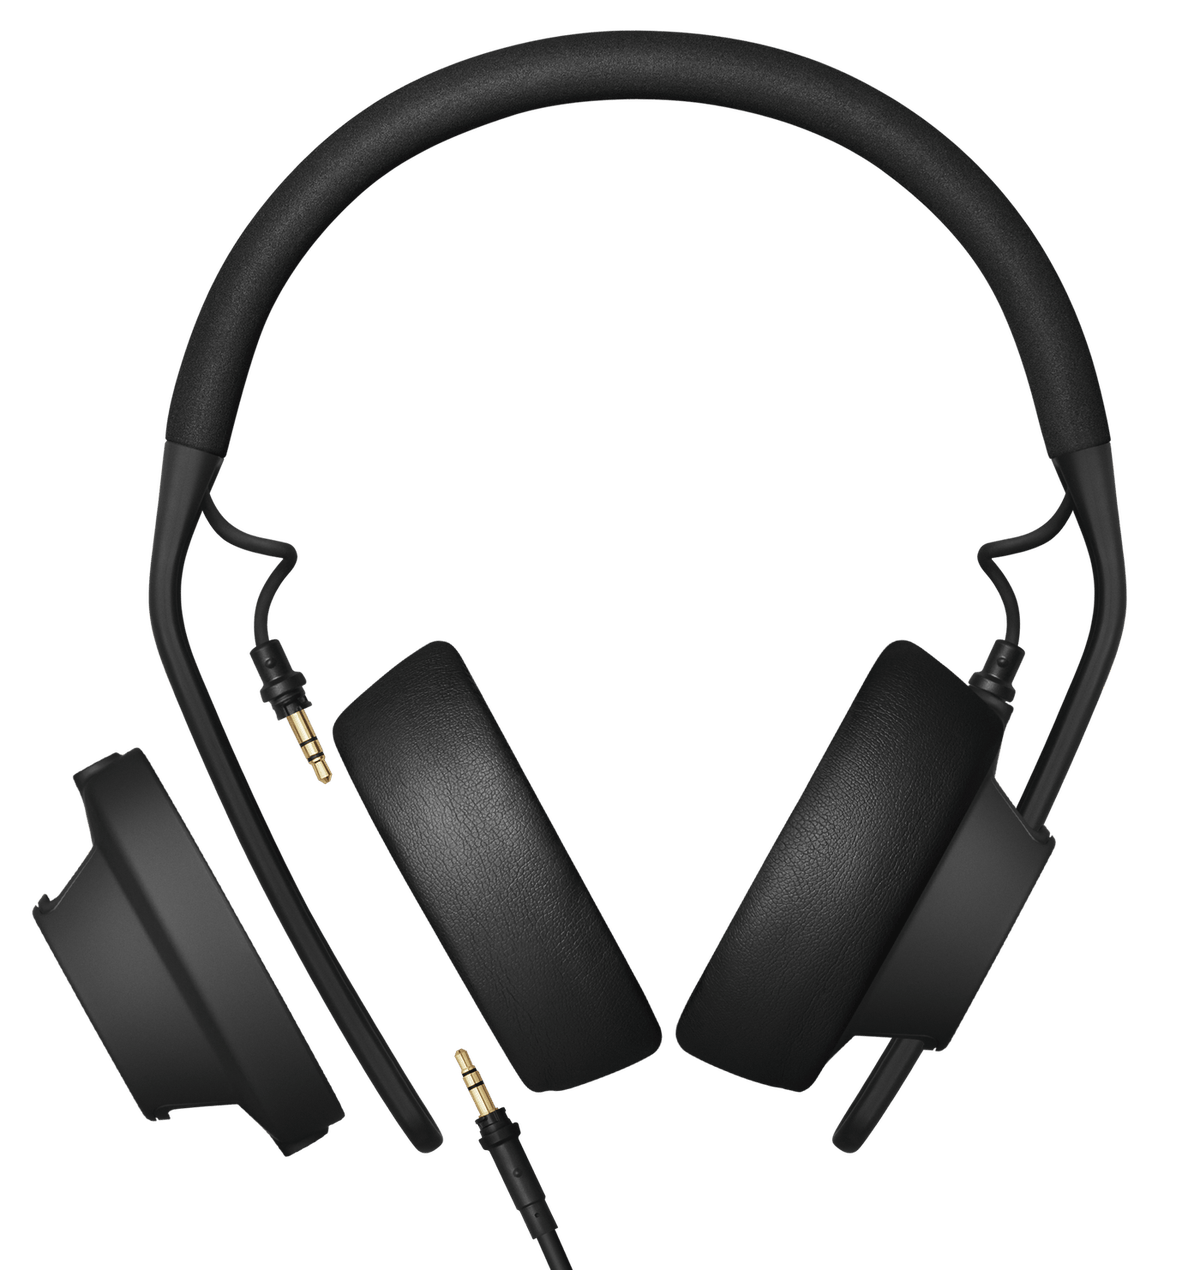 AIAIAI’s TMA-2 Studio XE headphones also include modular components (AIAIAI)